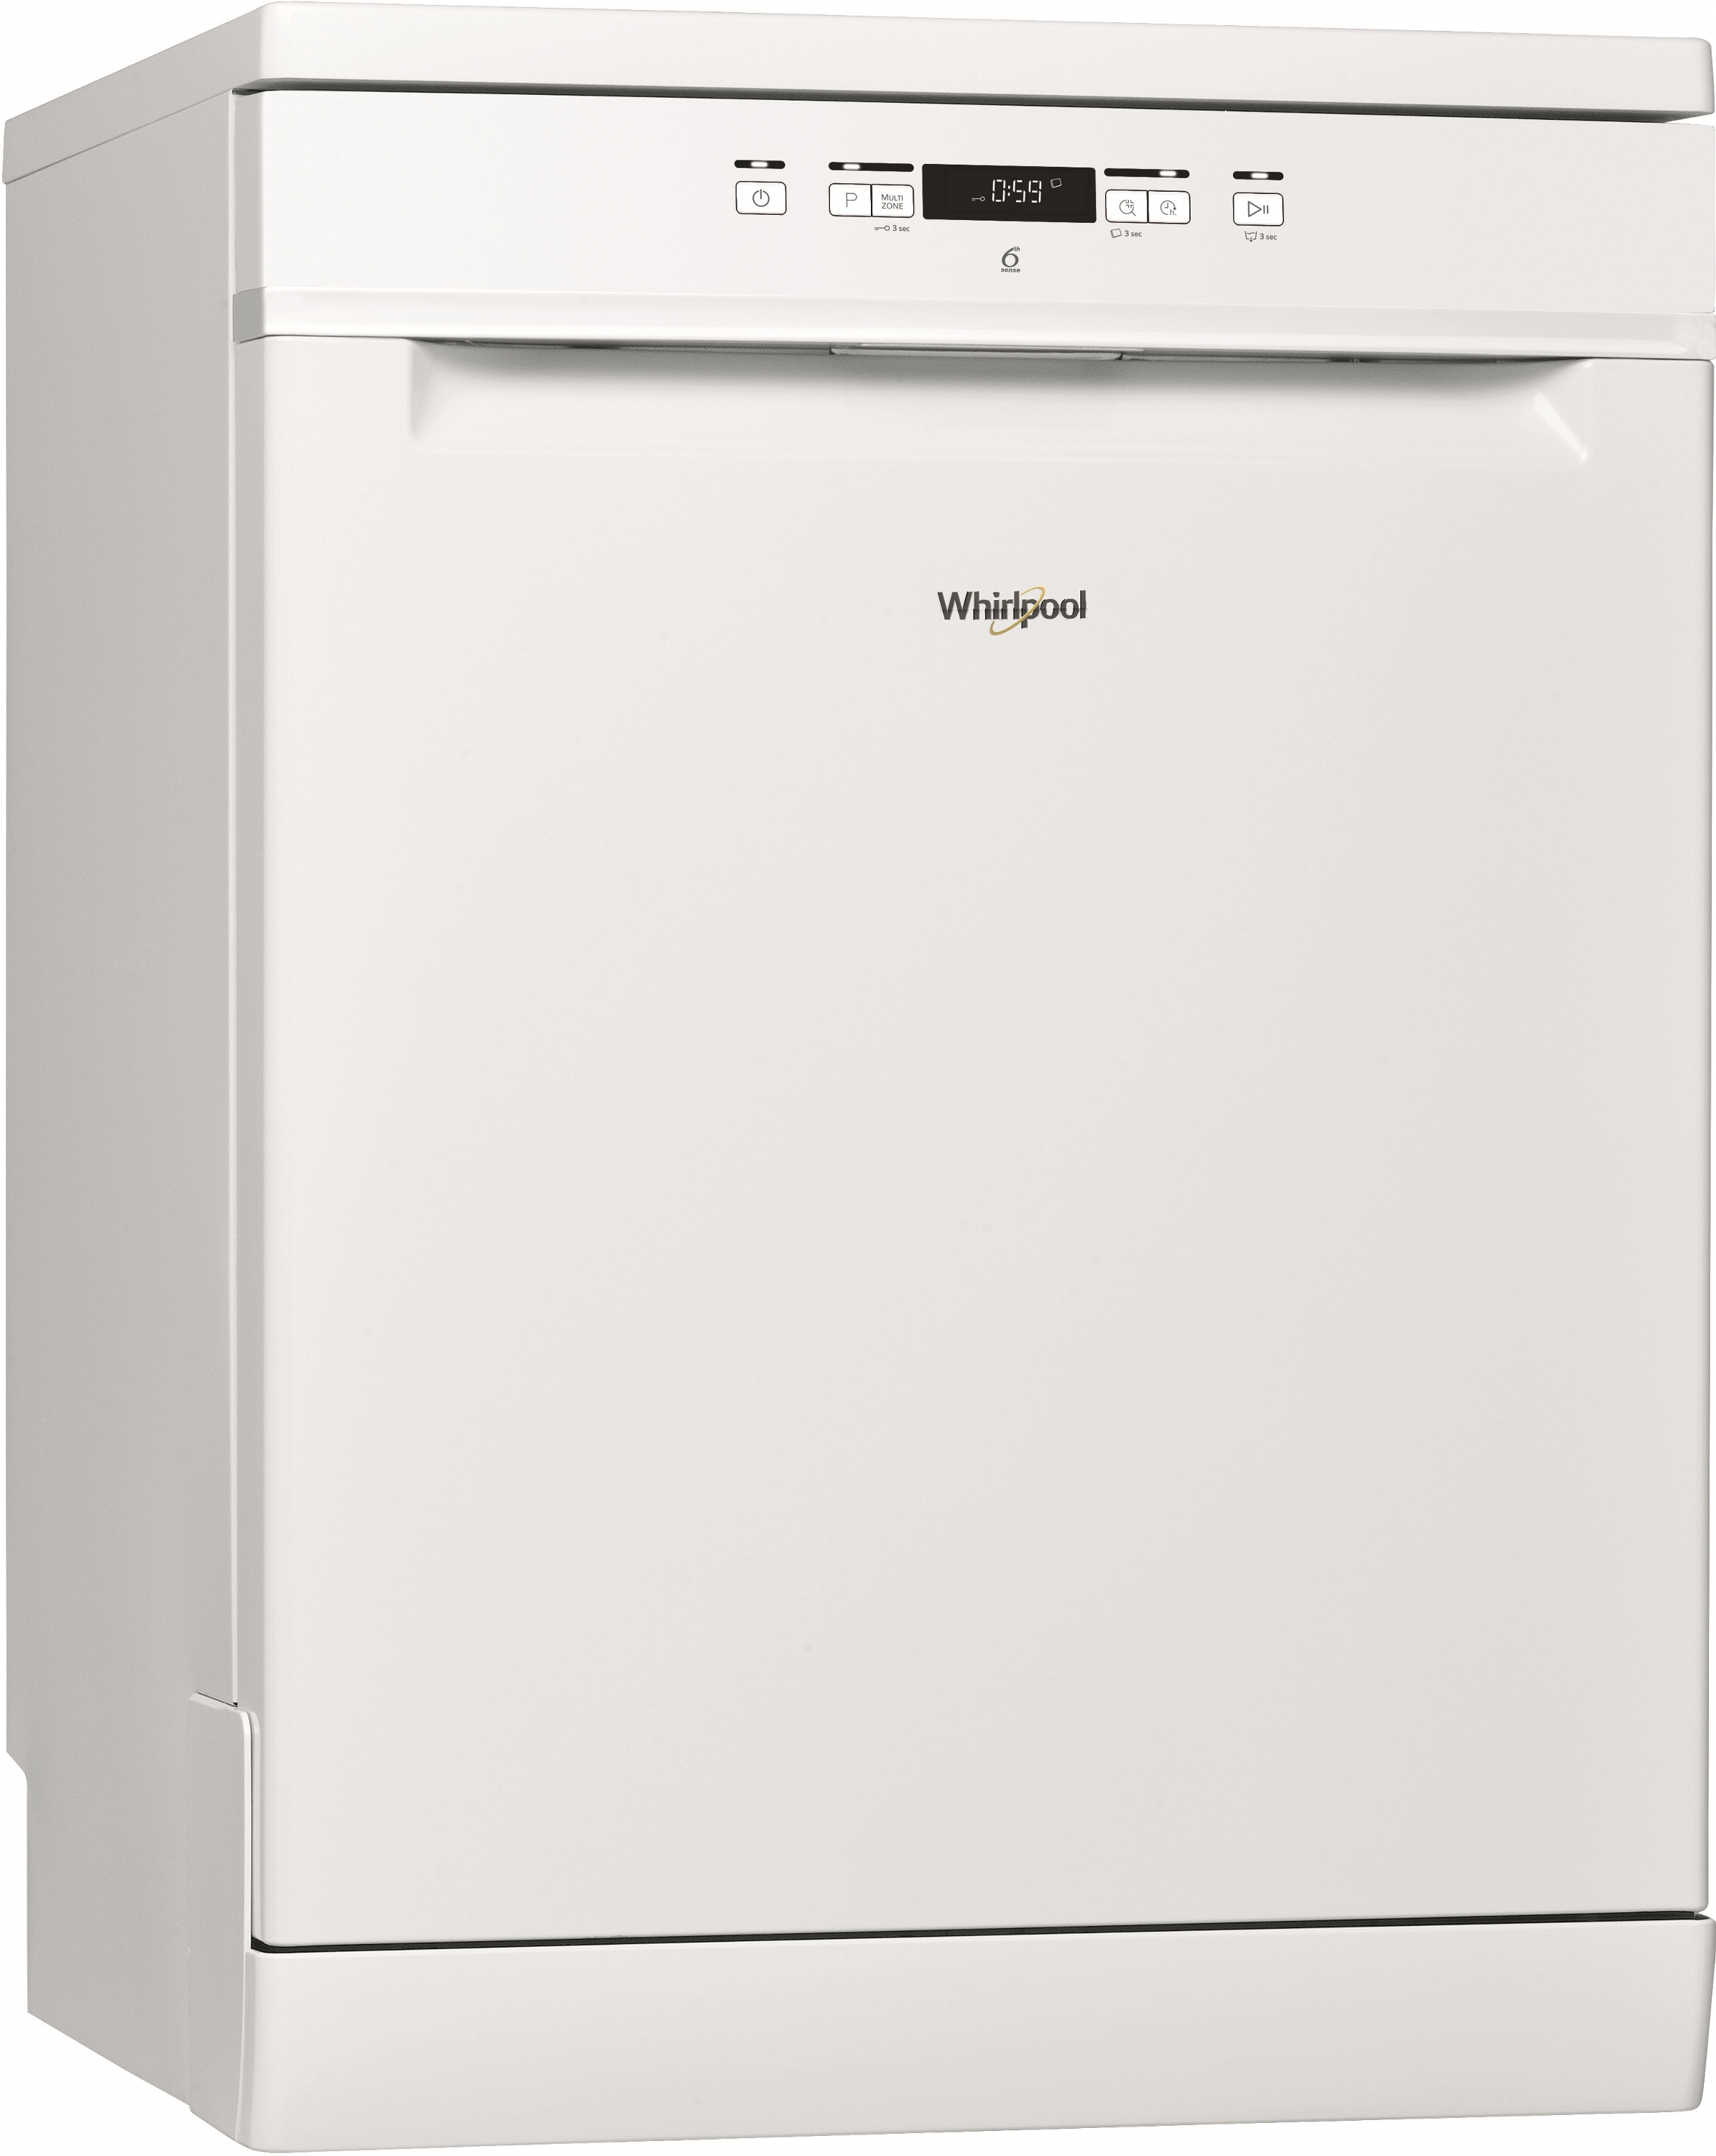 Hotpoint ariston узкая. Посудомоечная машина Whirlpool WSFC 3m17. Посудомоечная машина (45 см) Hotpoint-Ariston hsfo 3t223 w. Hotpoint-Ariston HFC 3c26 f белый. Посудомоечная машина Whirlpool WSFE 2b19.